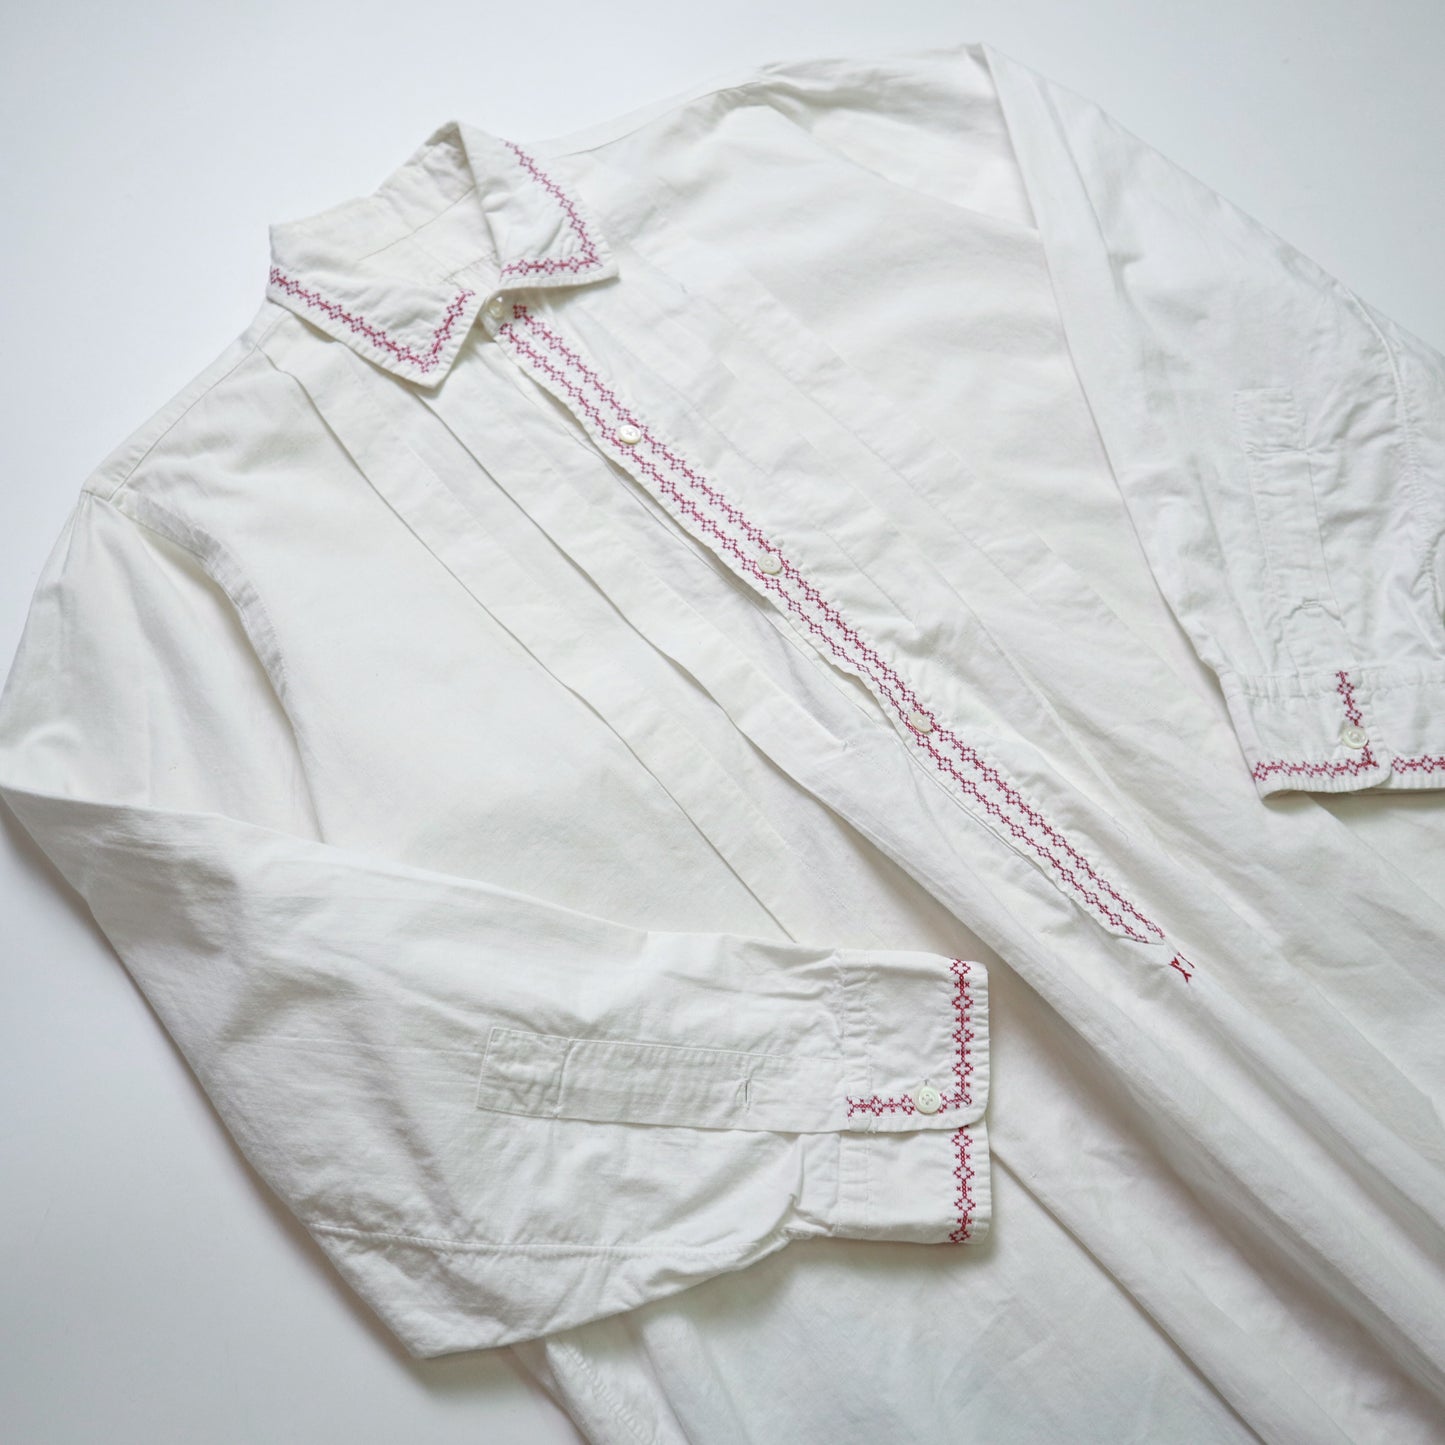 1960s Antique French nightshirt 法國刺繡睡衣襯衫